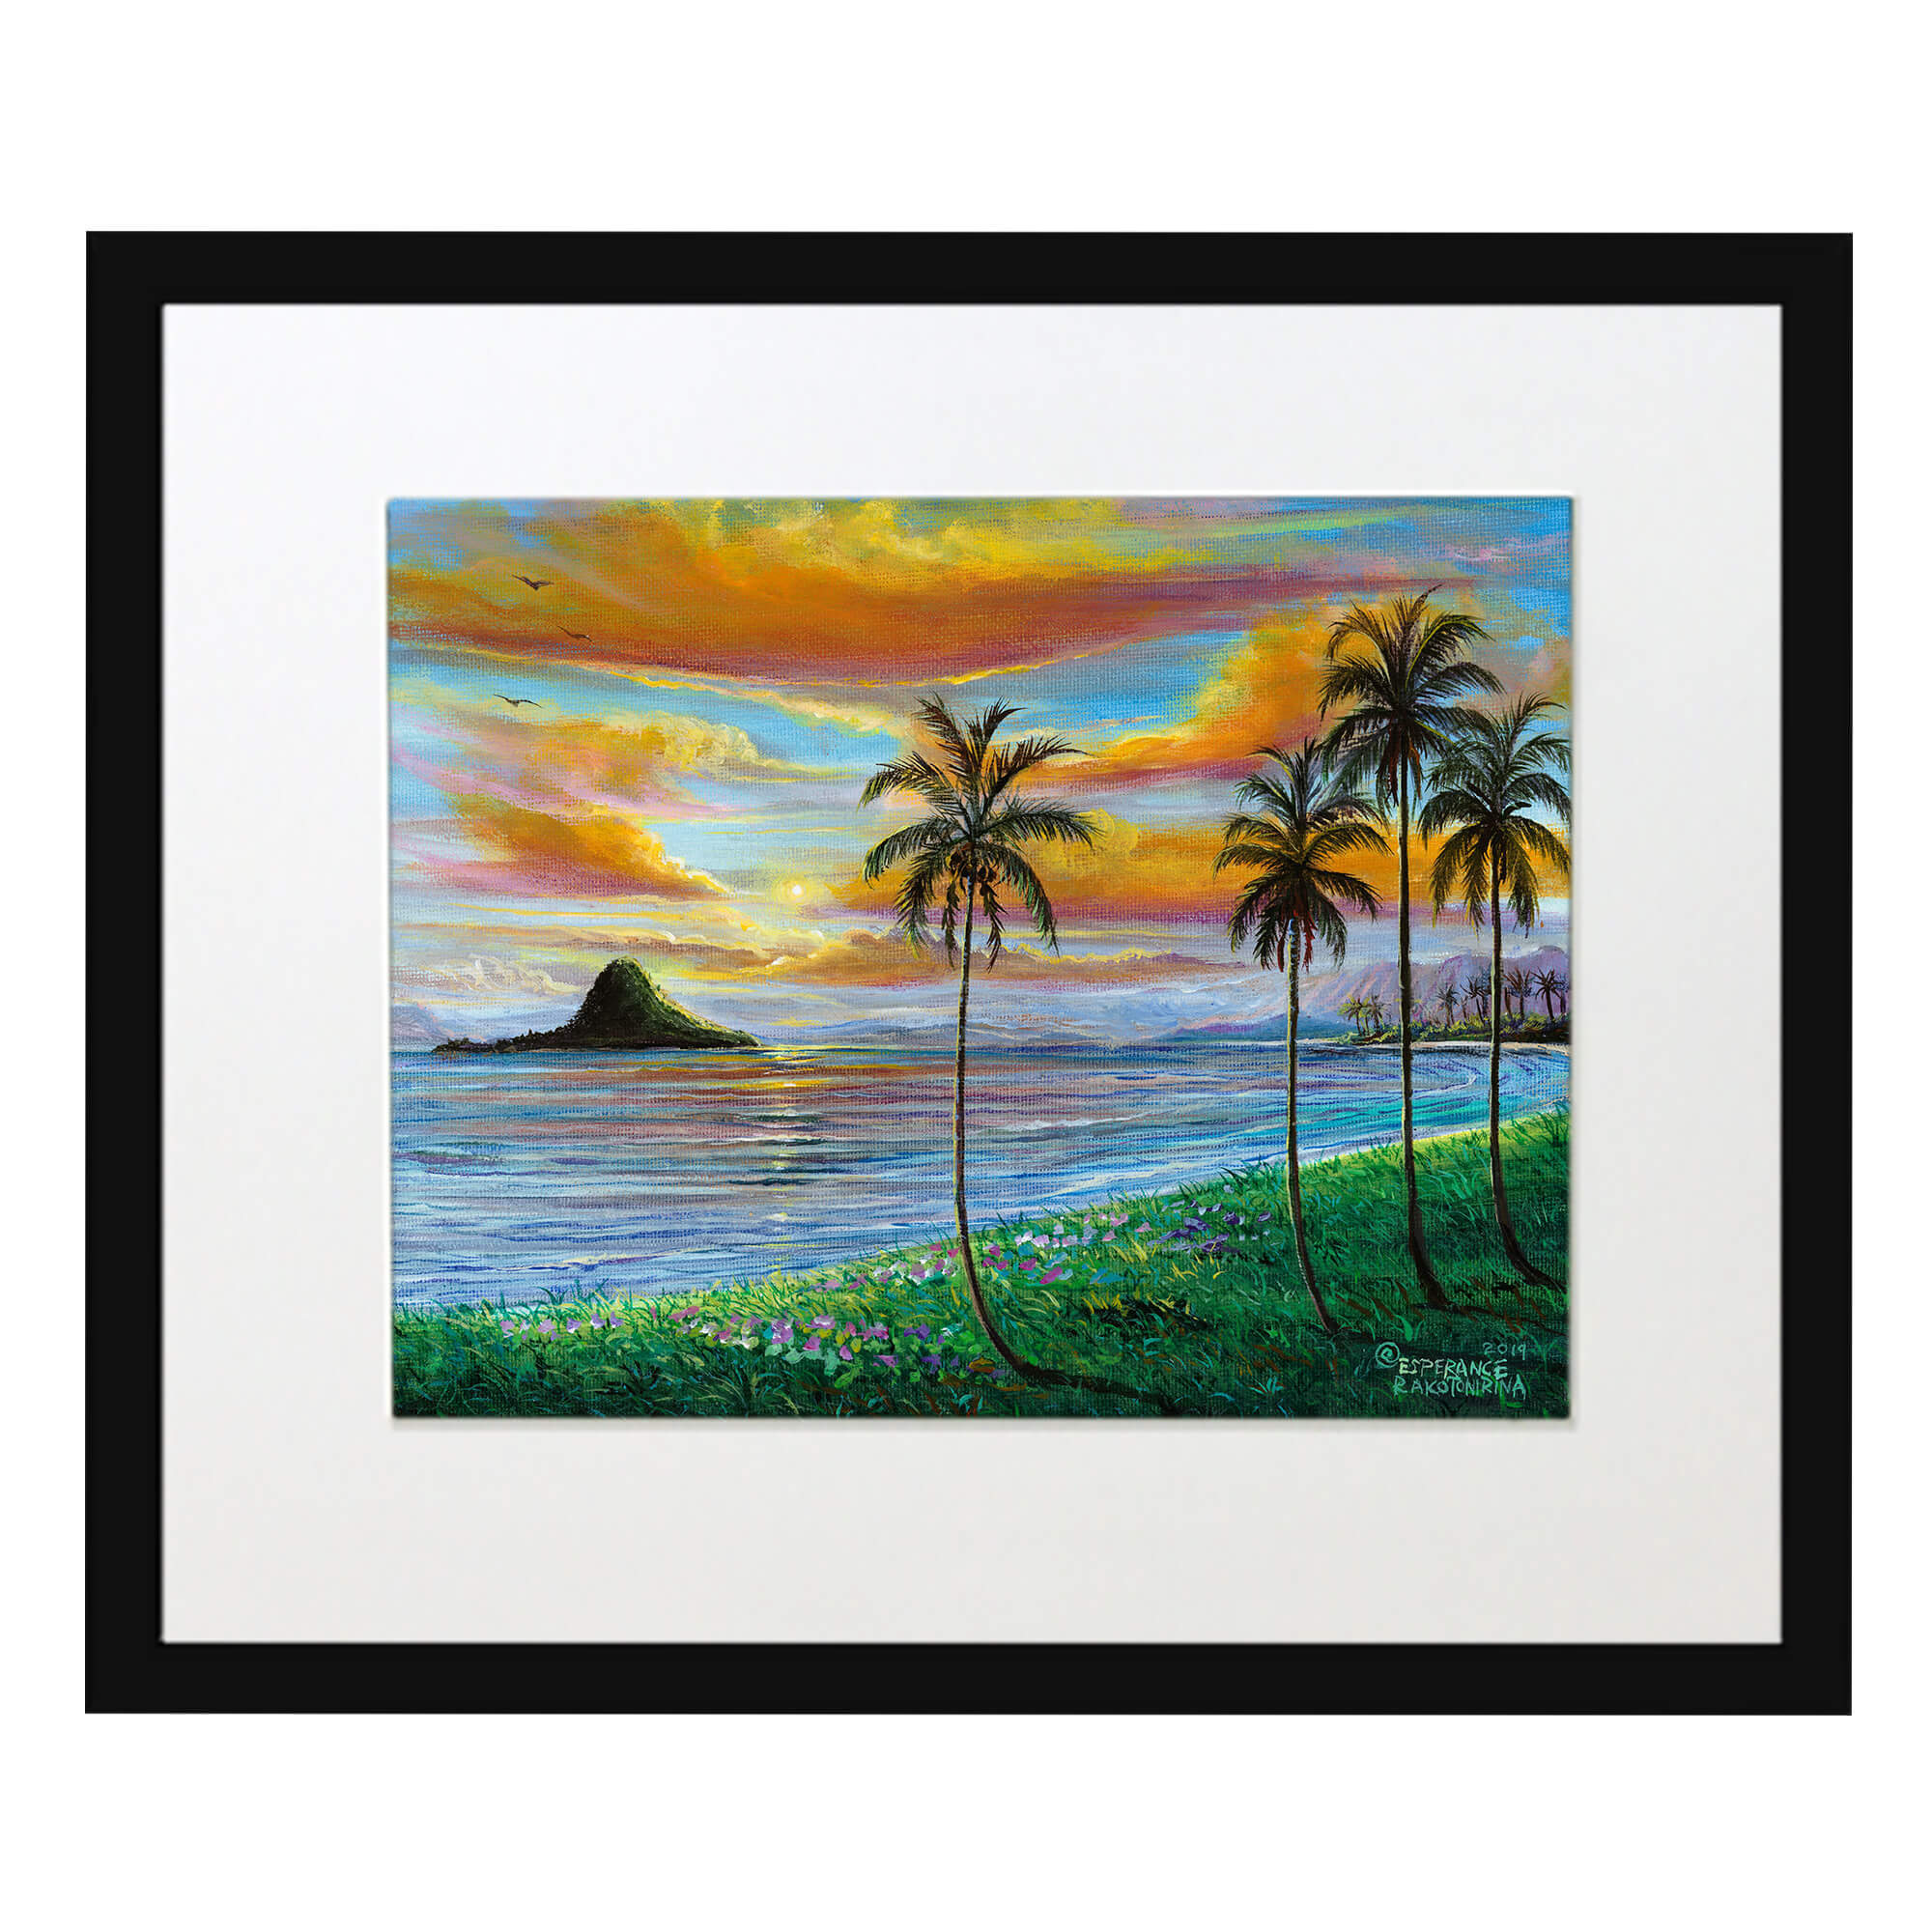 Matted art with black frame illustrating  palm trees on the island  by hawaii artist Esperance Rakotonirina